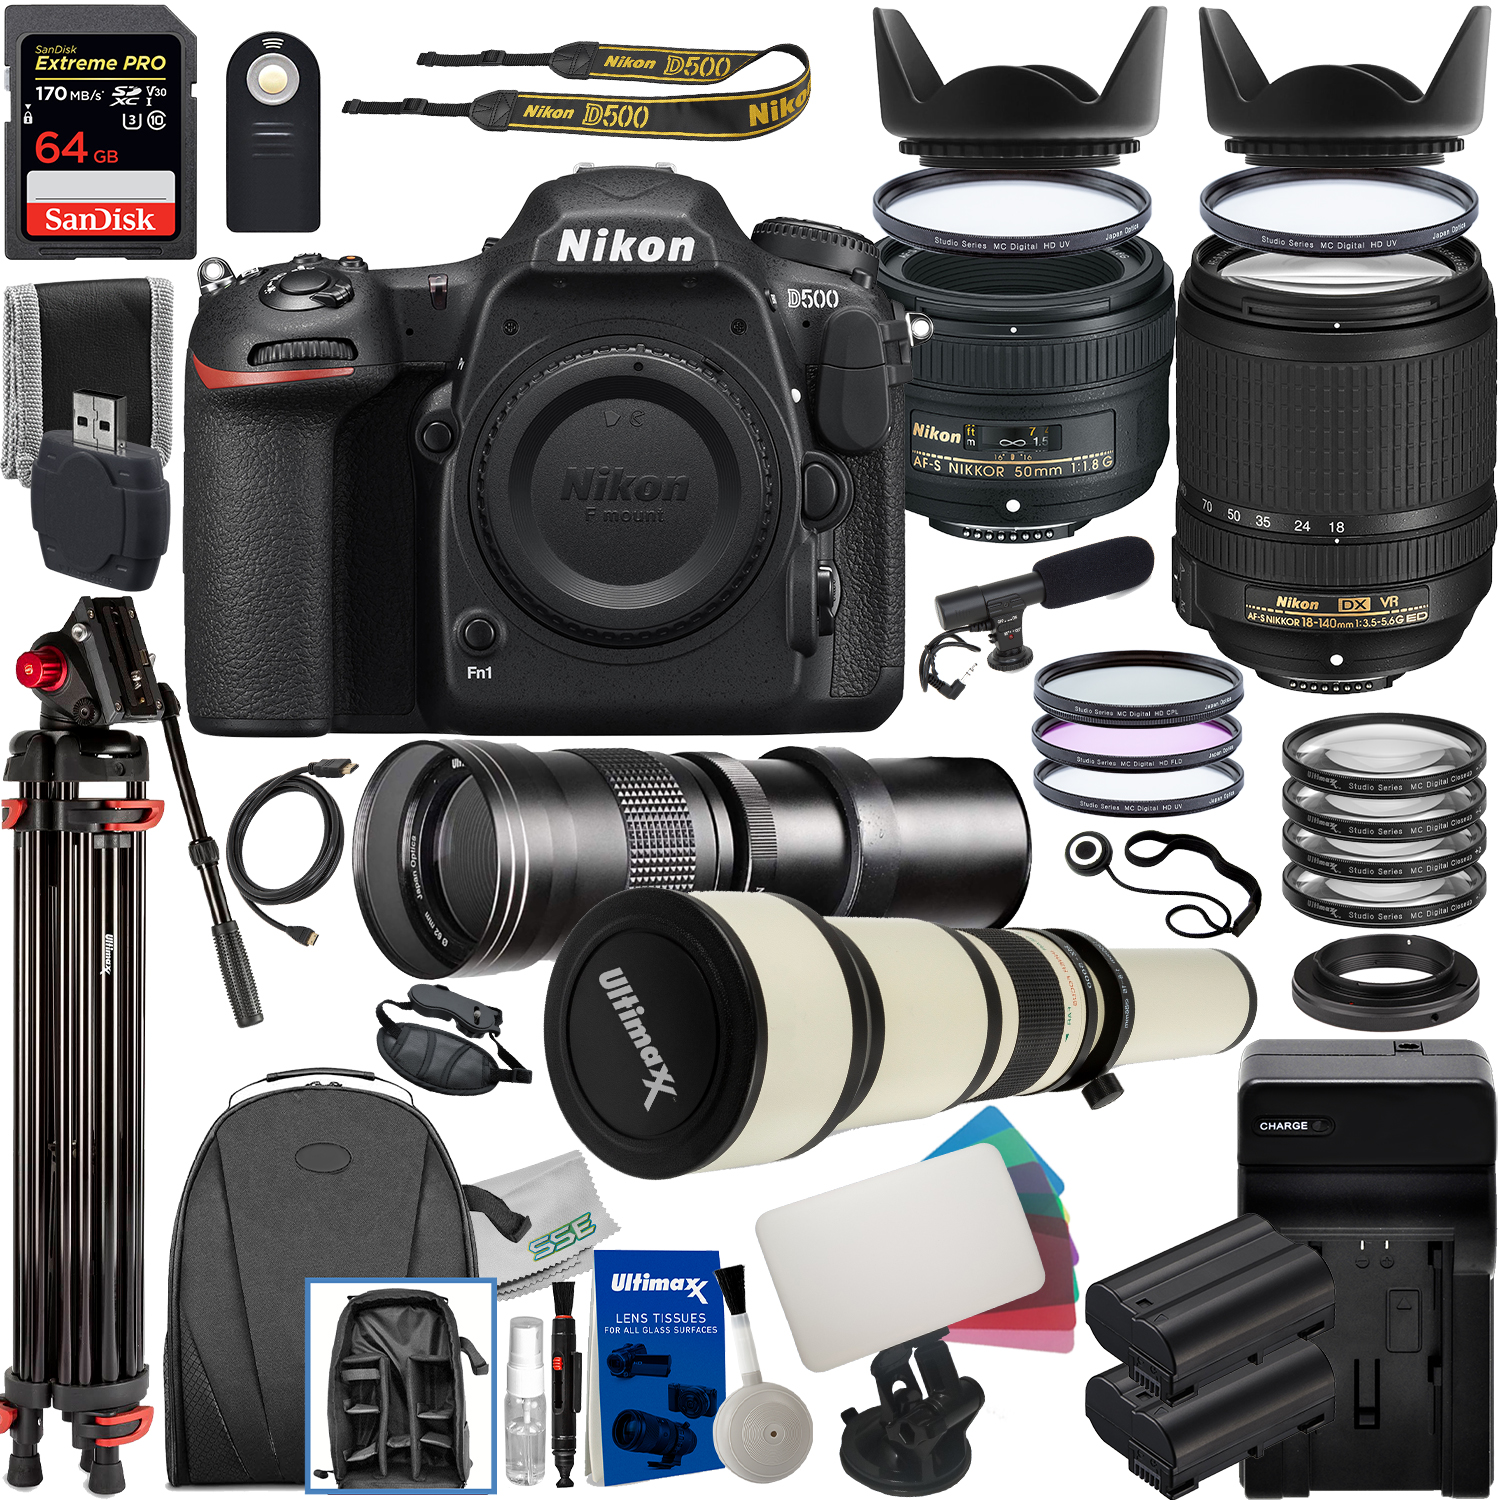 Nikon D500 DSLR Camera with 18-140mm Lens, 50mm Lens, 420-800mm Telephoto Zoom Lens, 650- 1300mm Manual Zoom Lens & Deluxe Bundle: SanDisk Extreme PRO 64GB SDXC, Heavy Duty 72â? Tripod & Much More